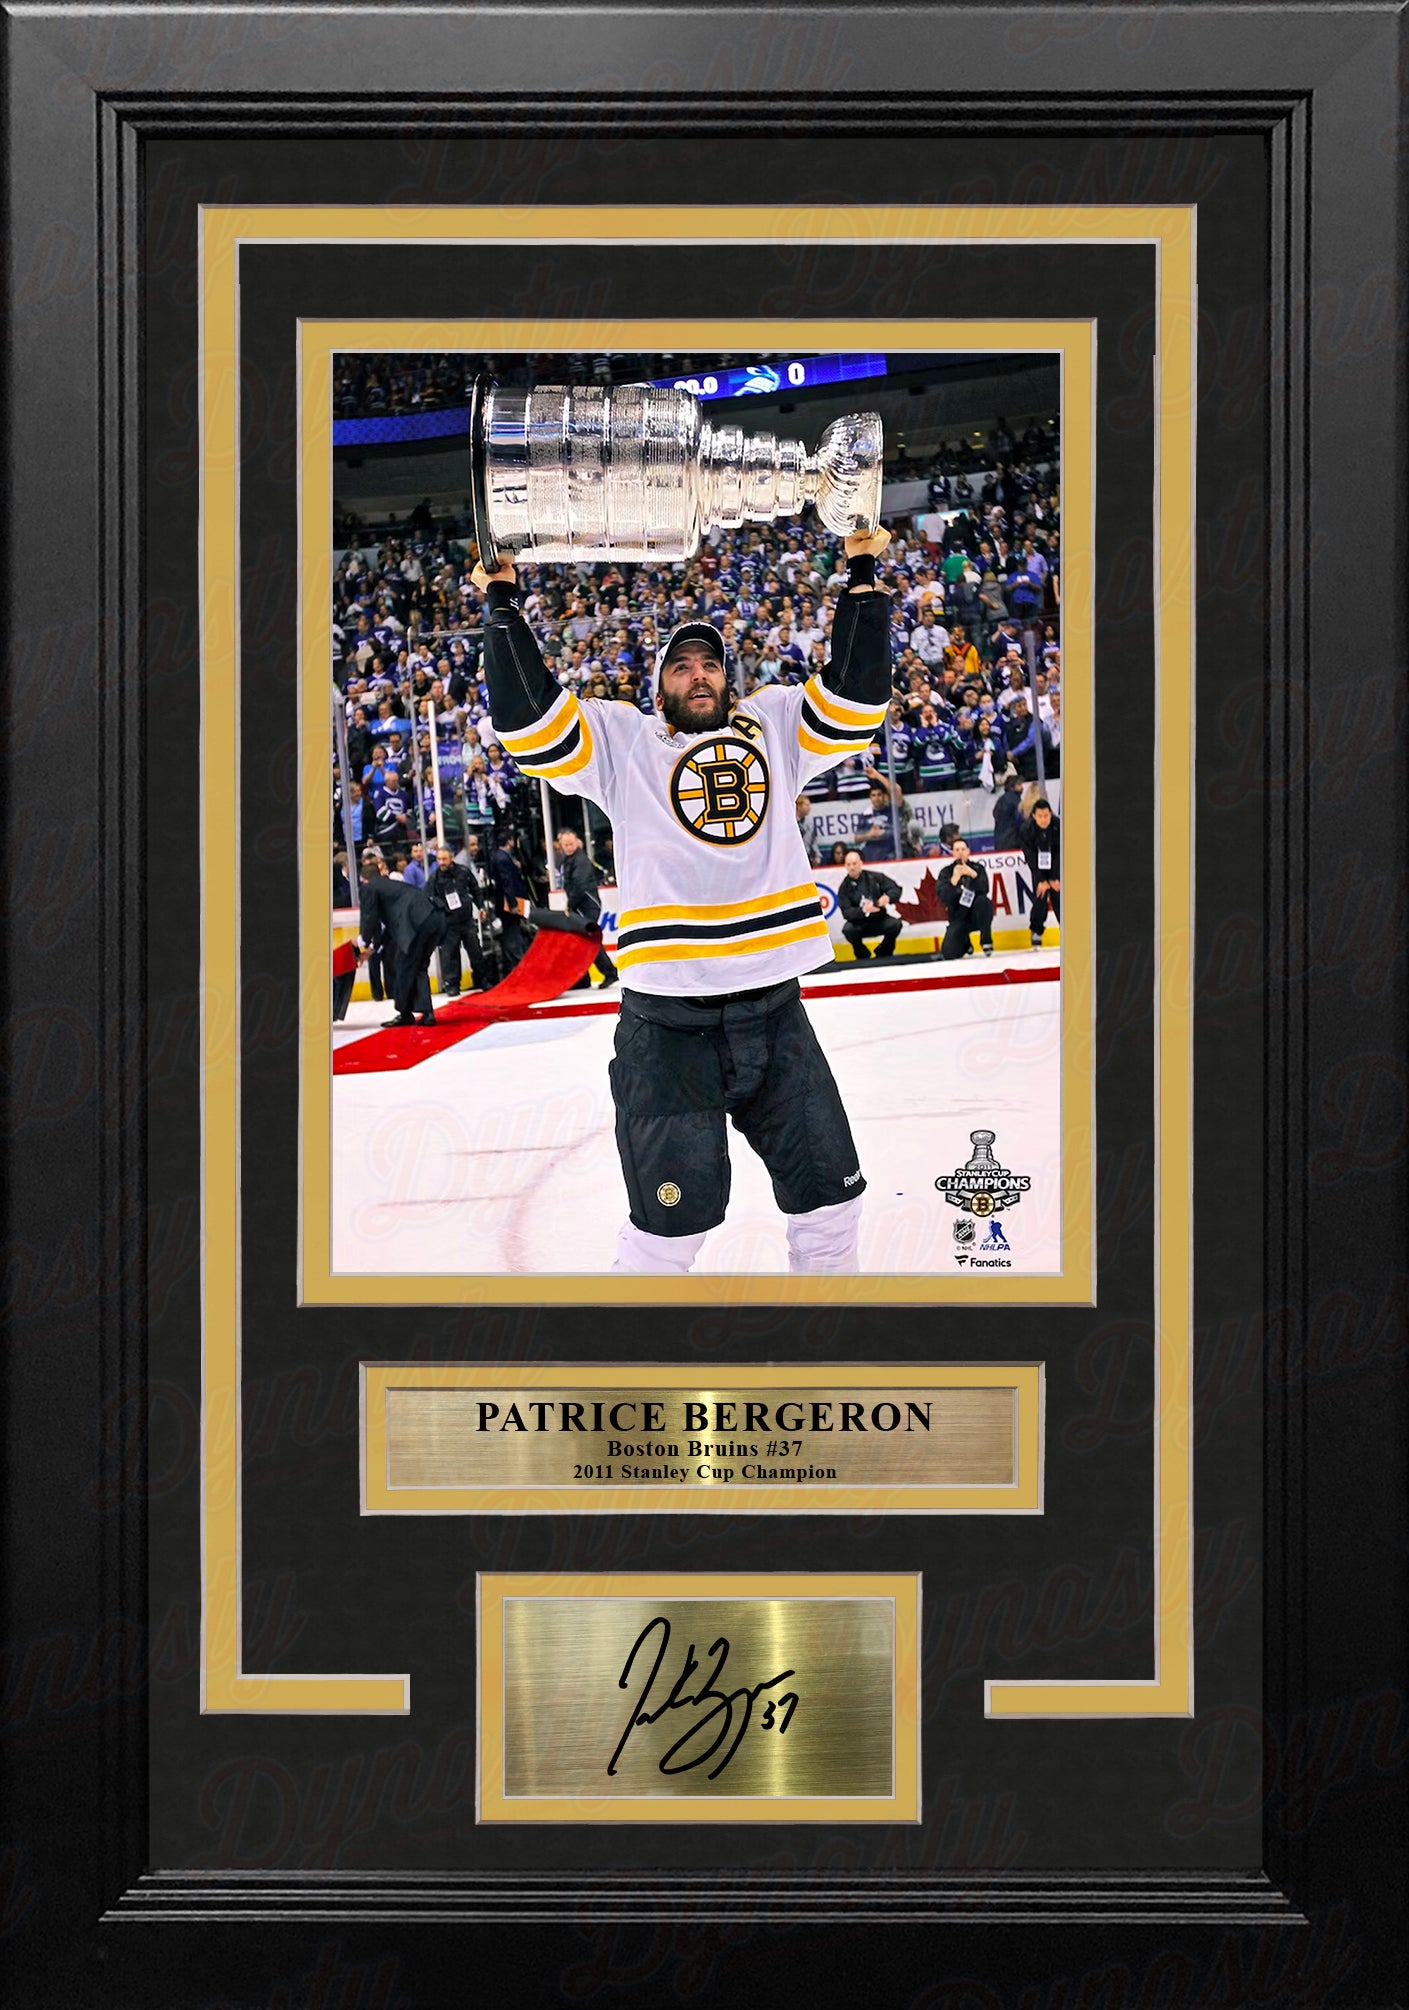 Patrice Bergeron Signed / Autographed Inscribed Captain Photo 8x10 - Boston  ProShop